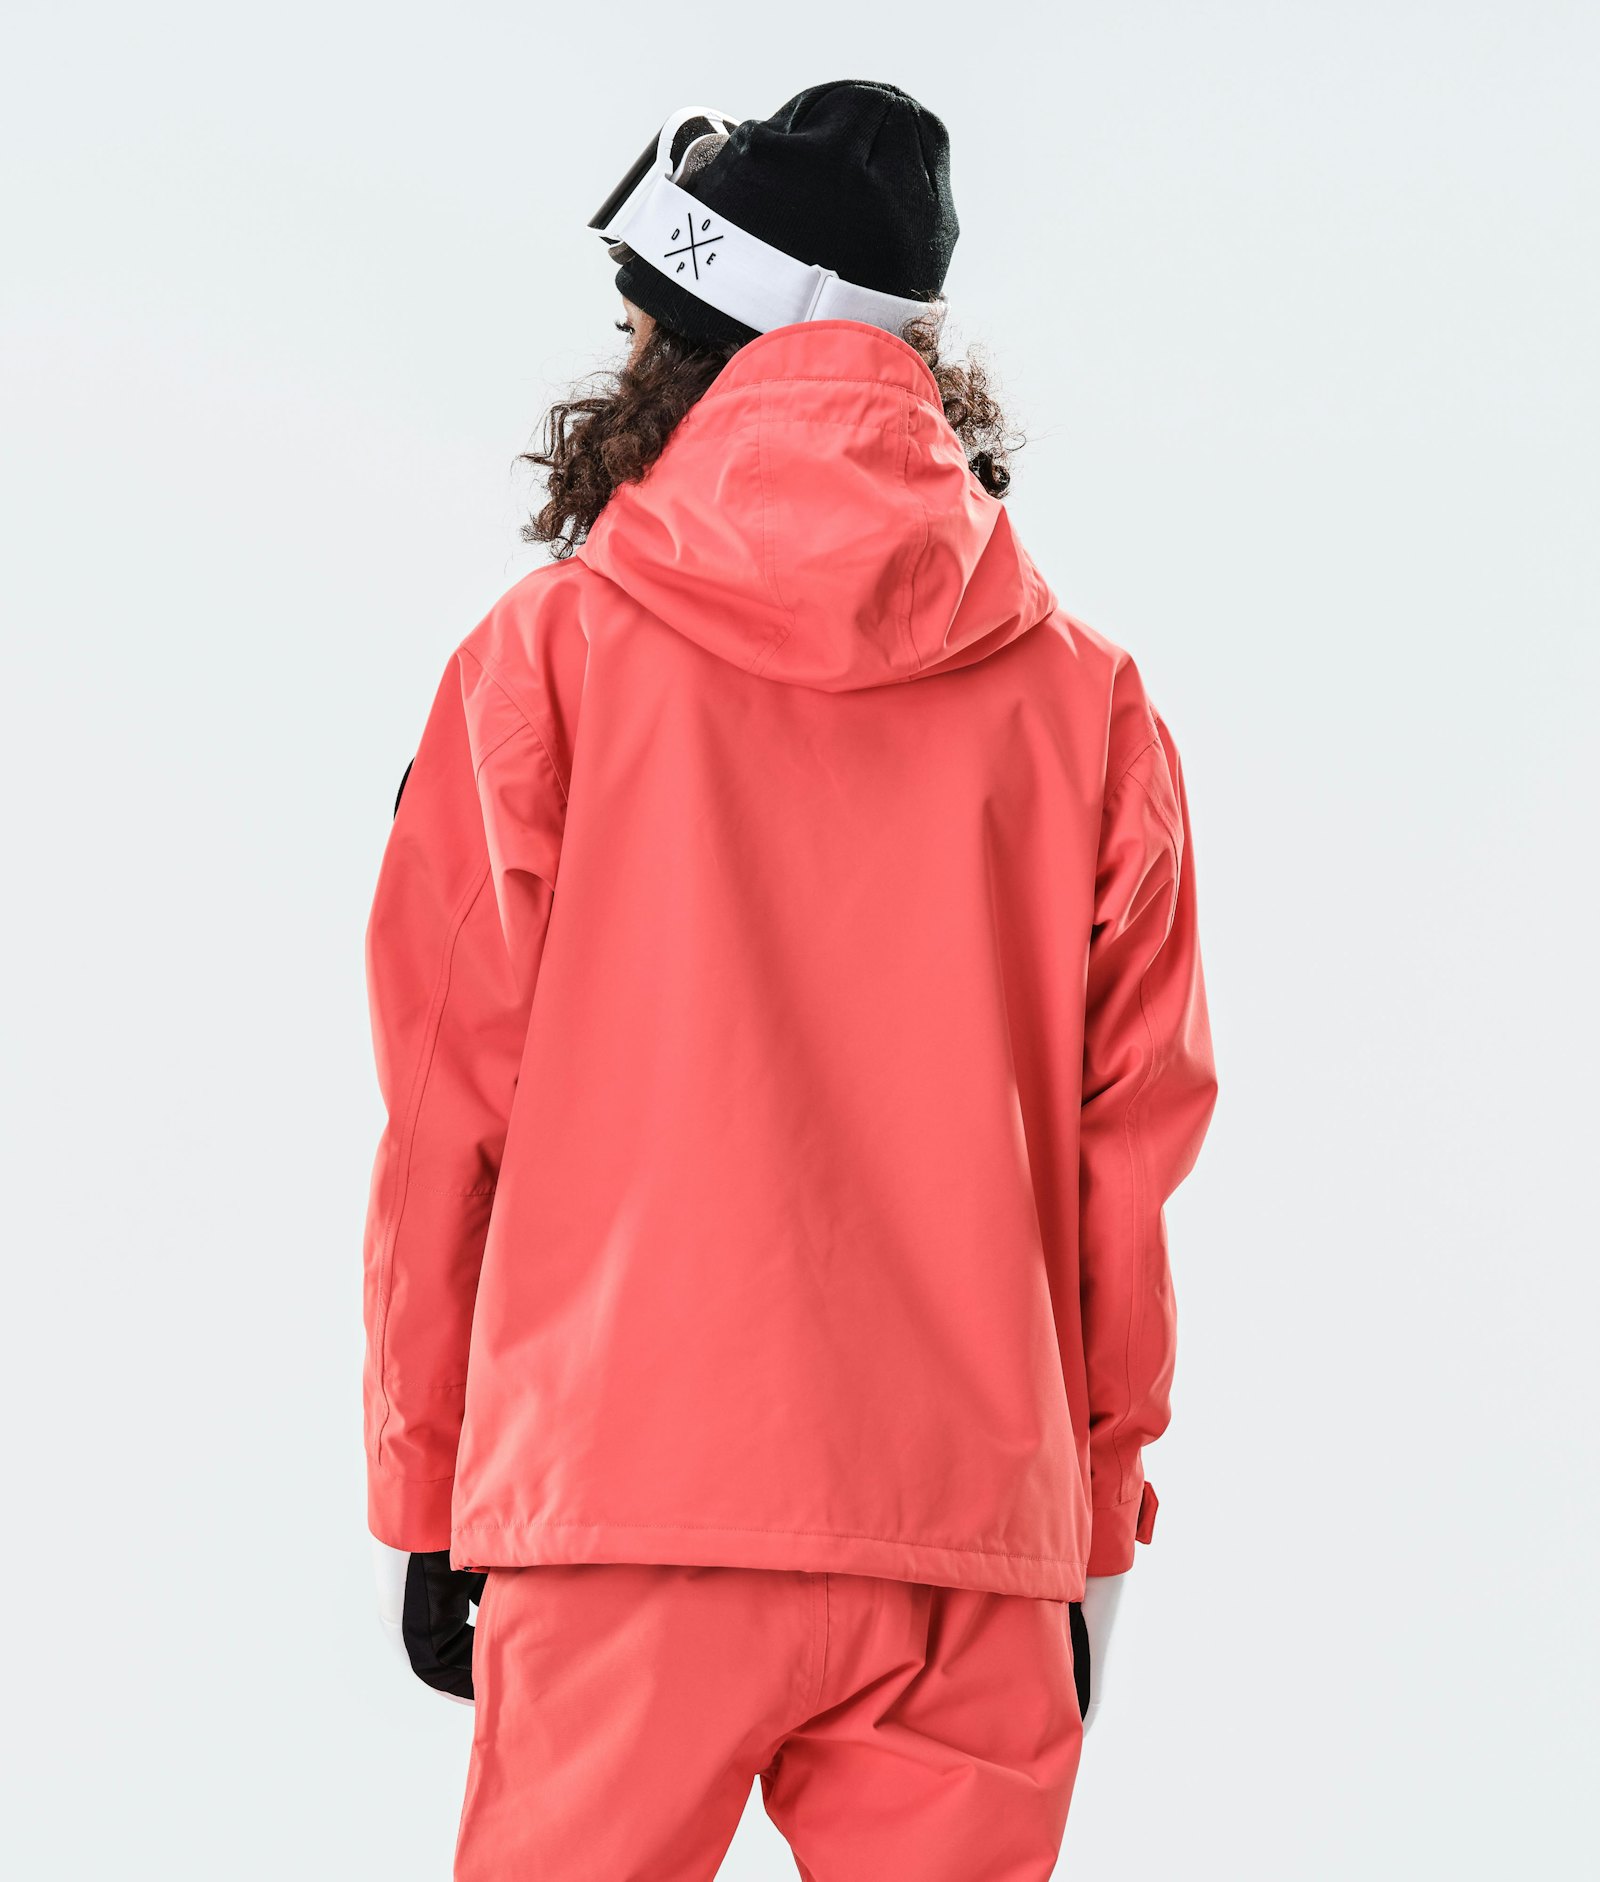 Blizzard W 2020 Snowboard Jacket Women Coral